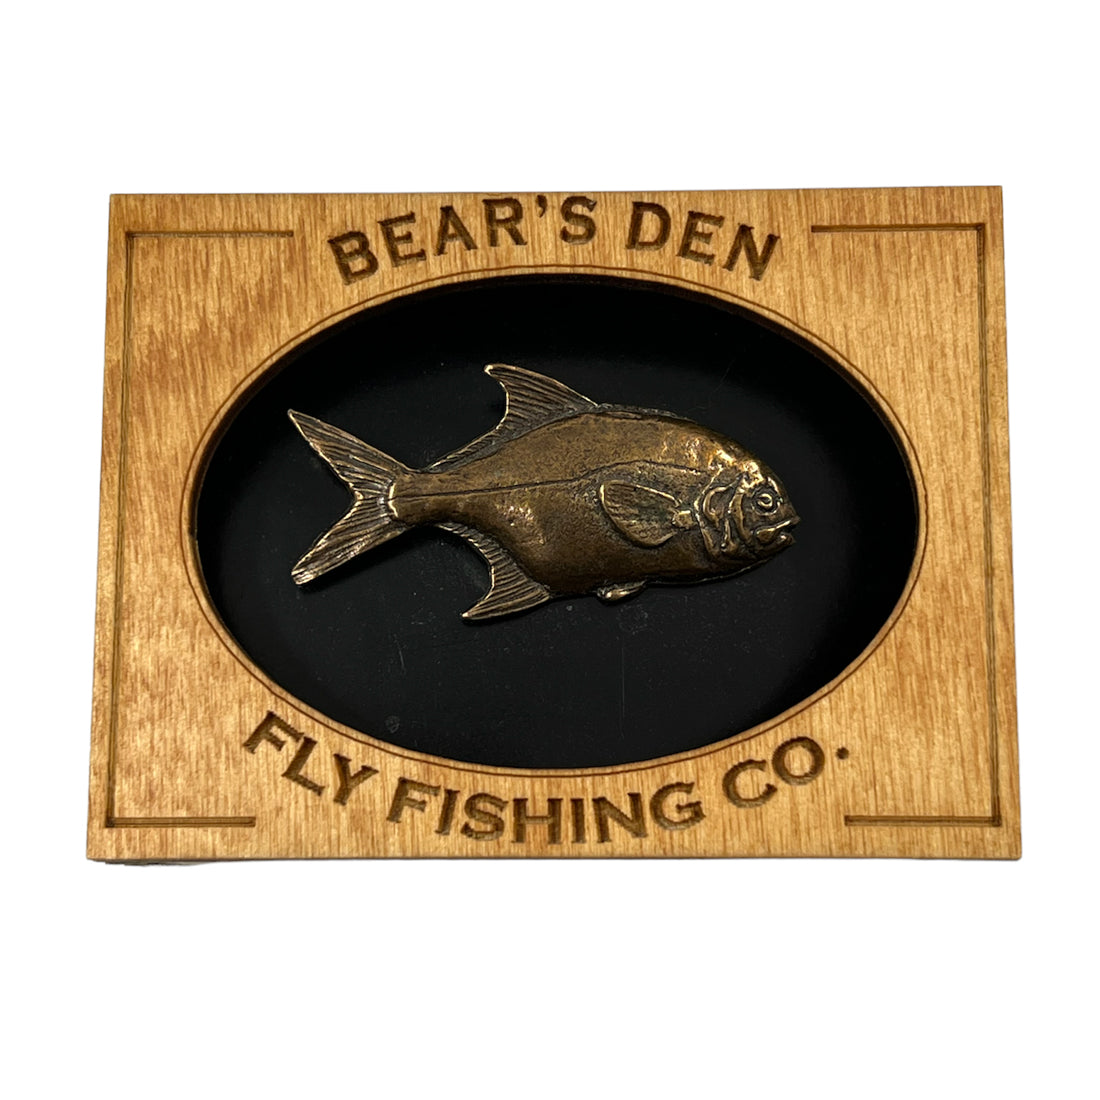 Loon Hook Holder – Bear's Den Fly Fishing Co.